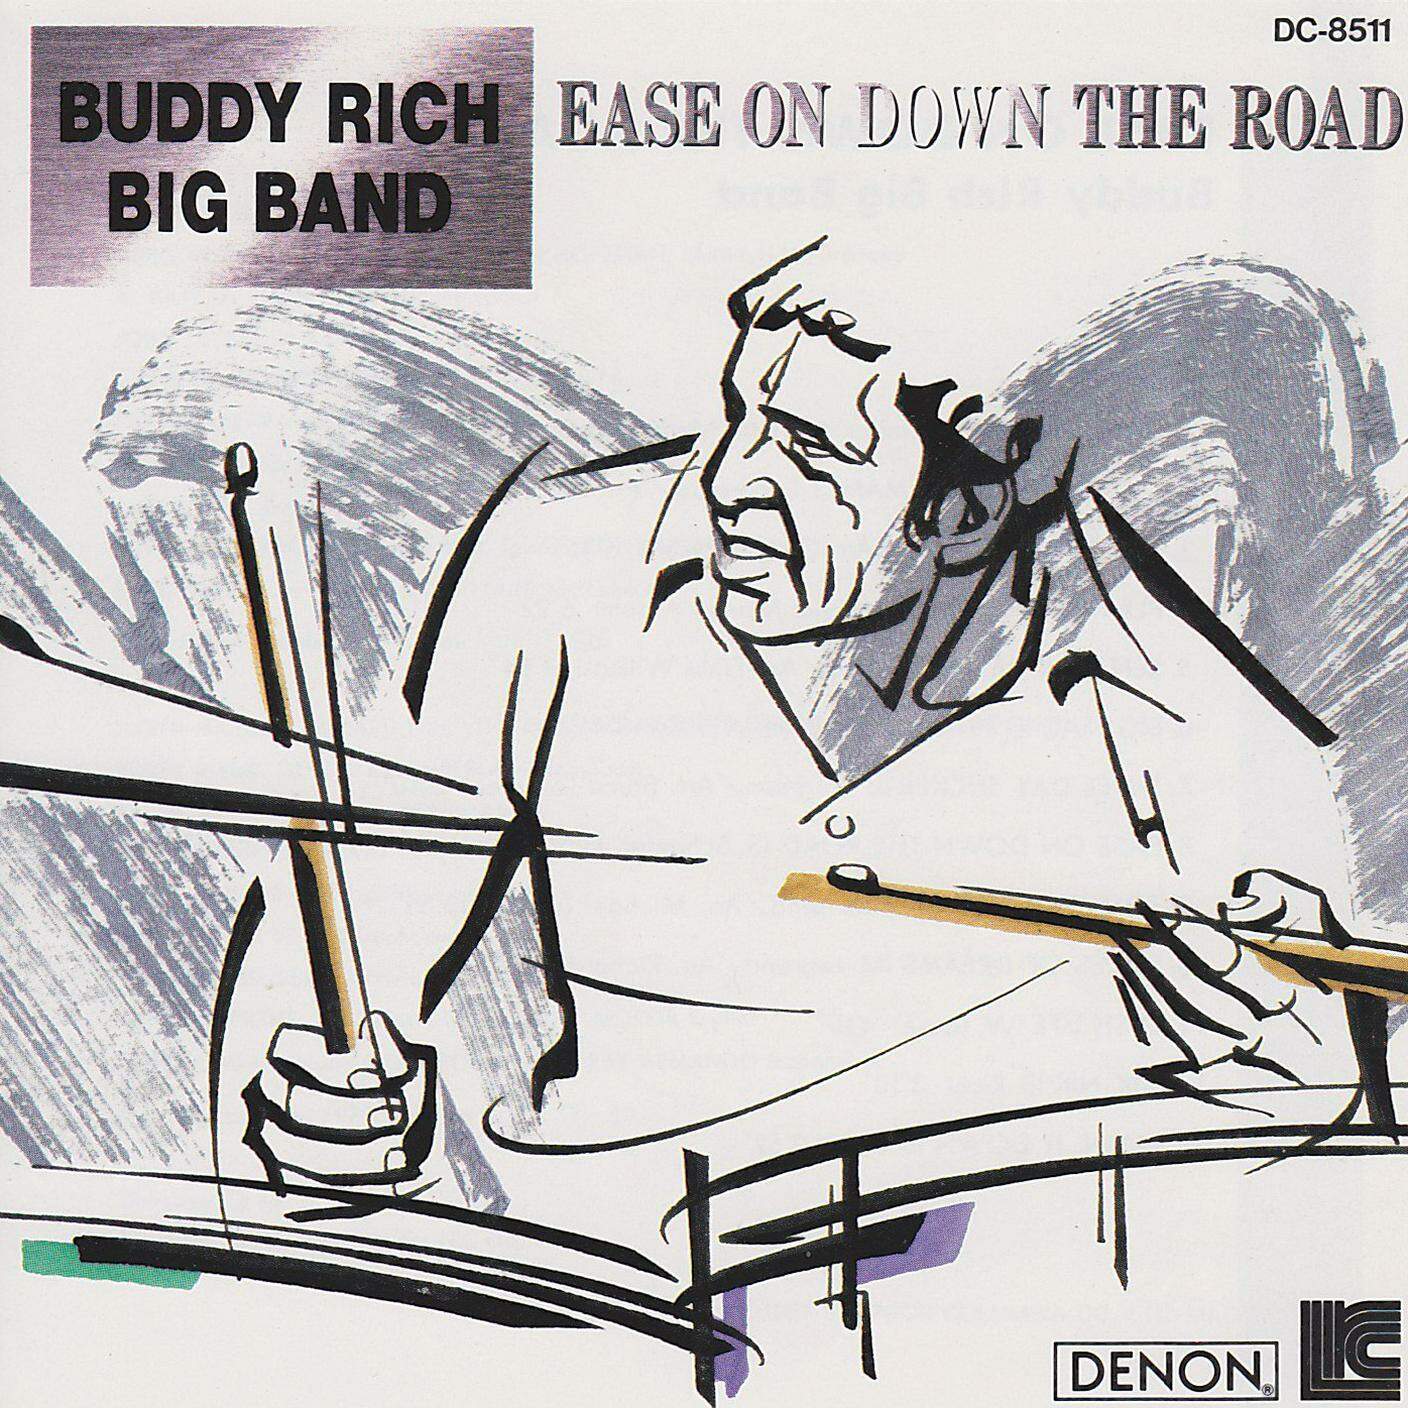 Buddy Rich; "Lush life"; LRC LTD (dettaglio copertina)